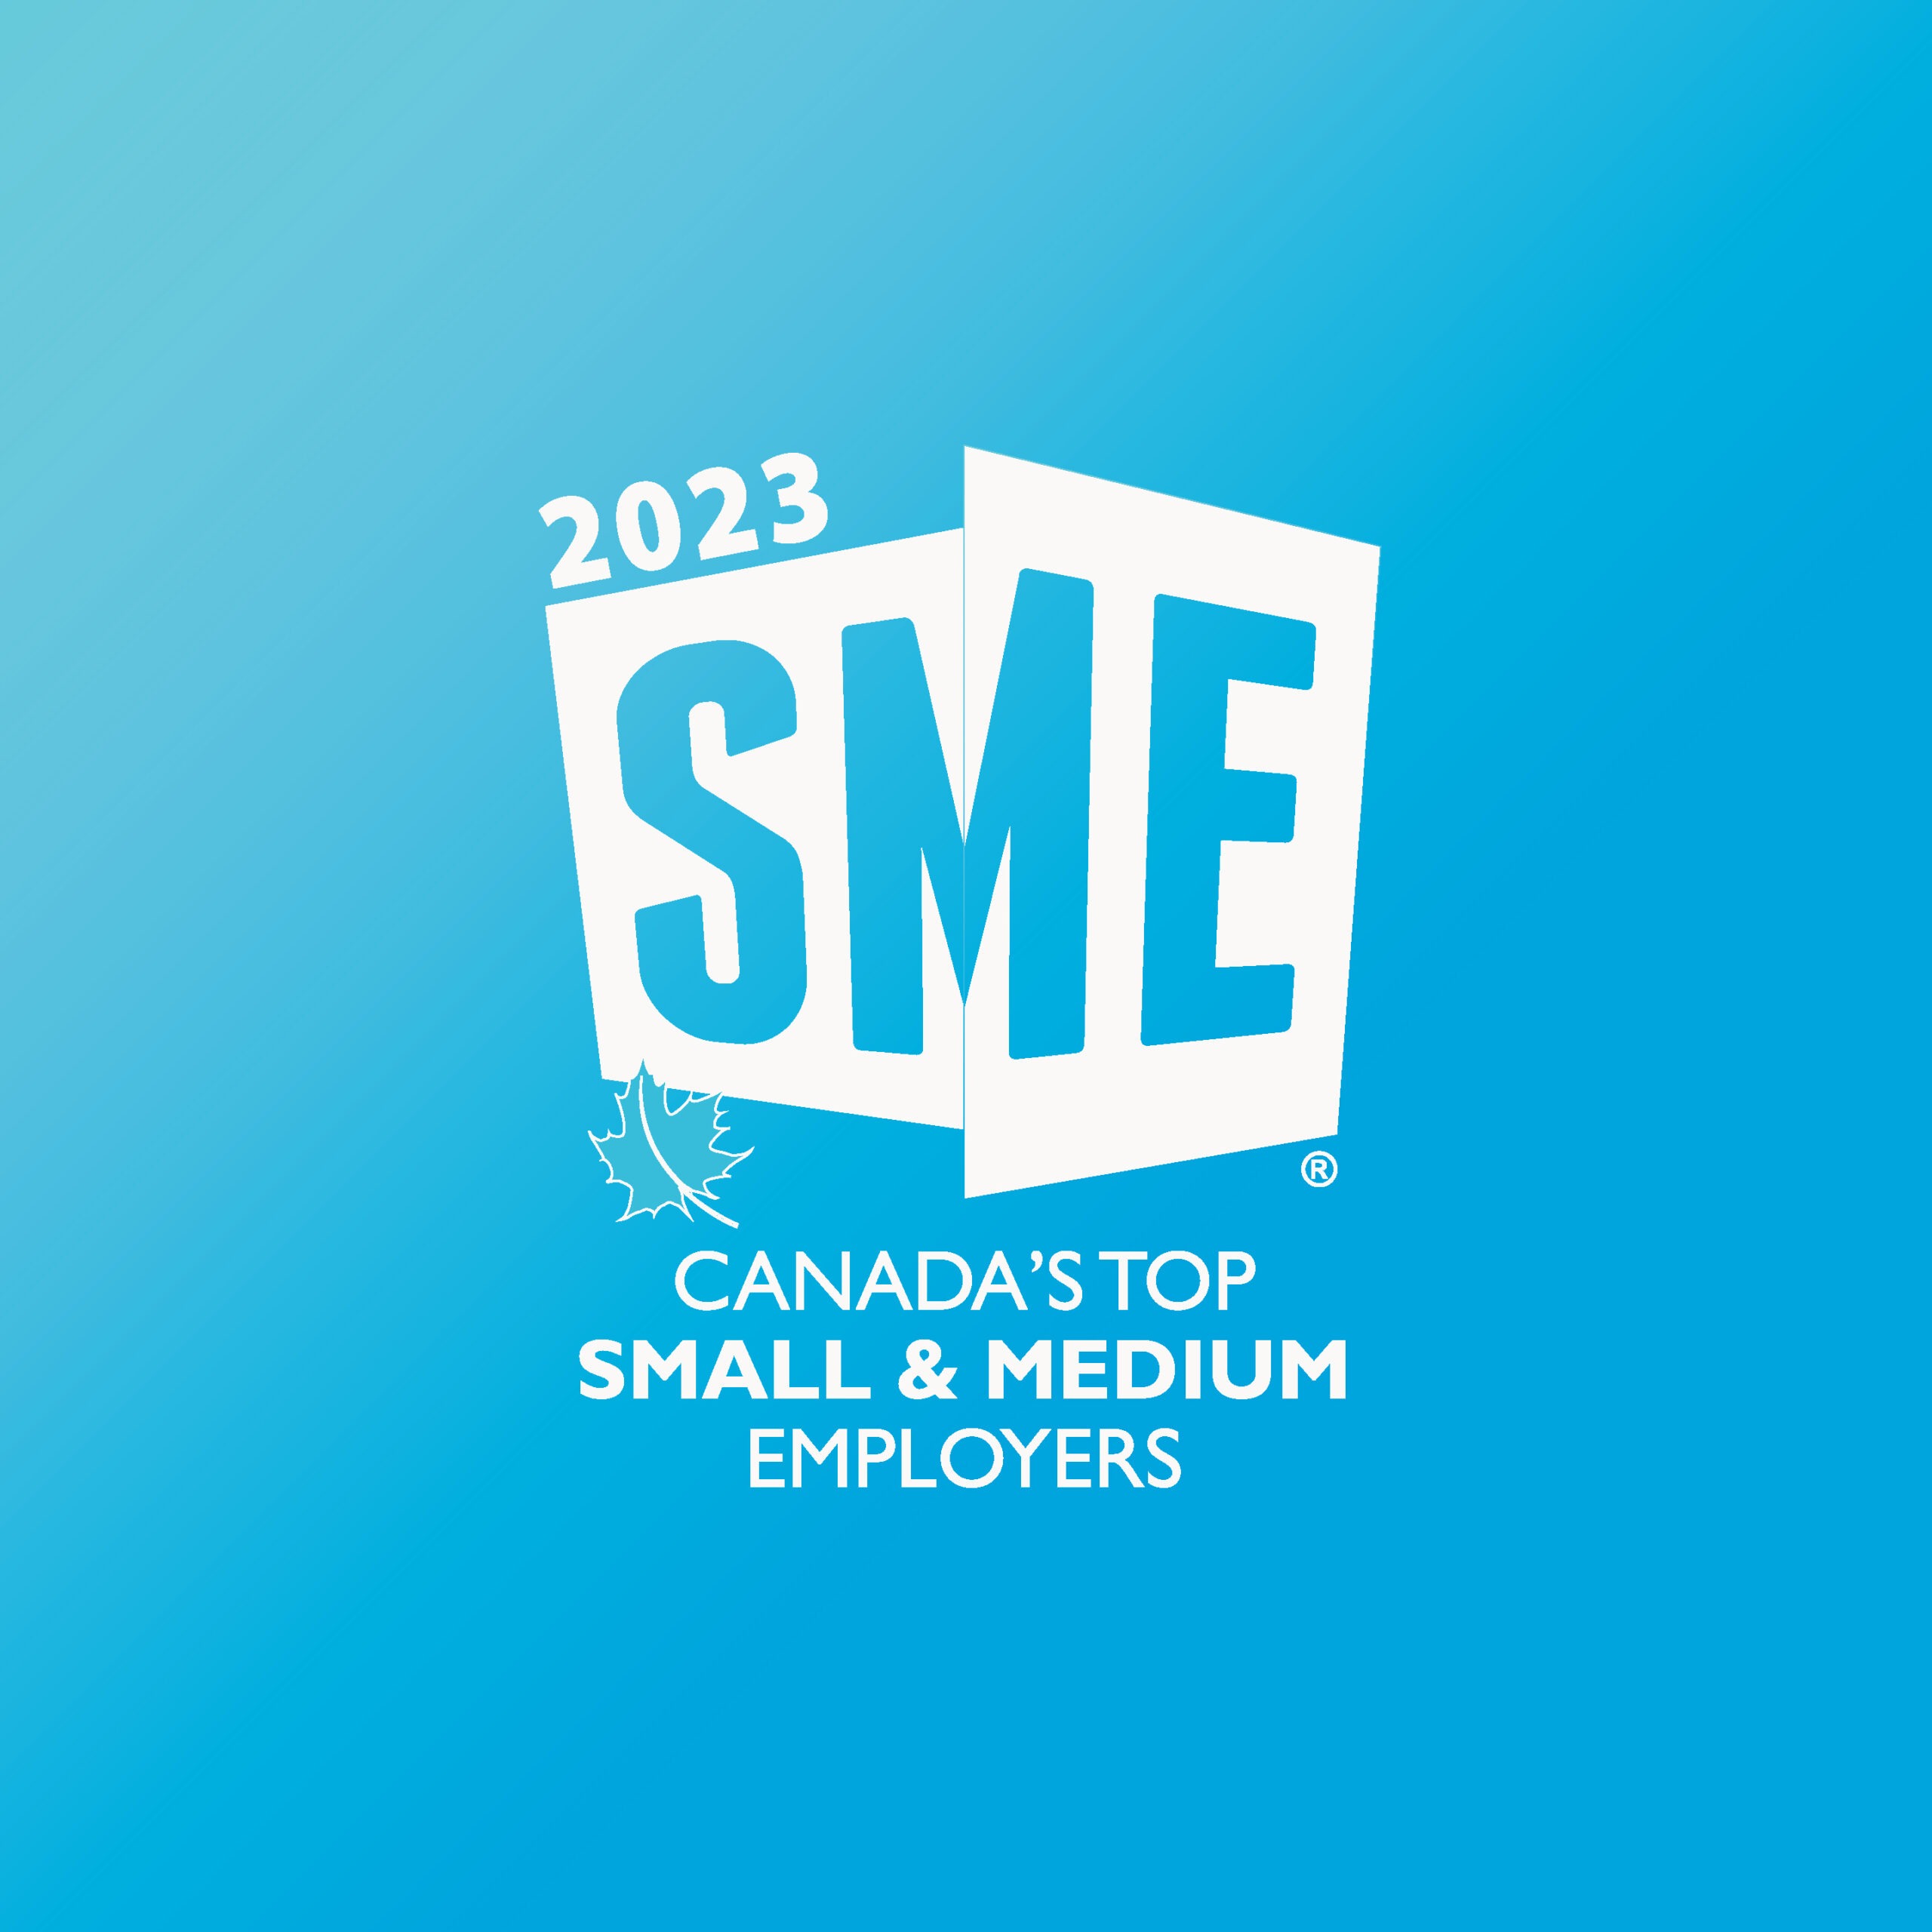 Canada’s Top SME Employer 2023